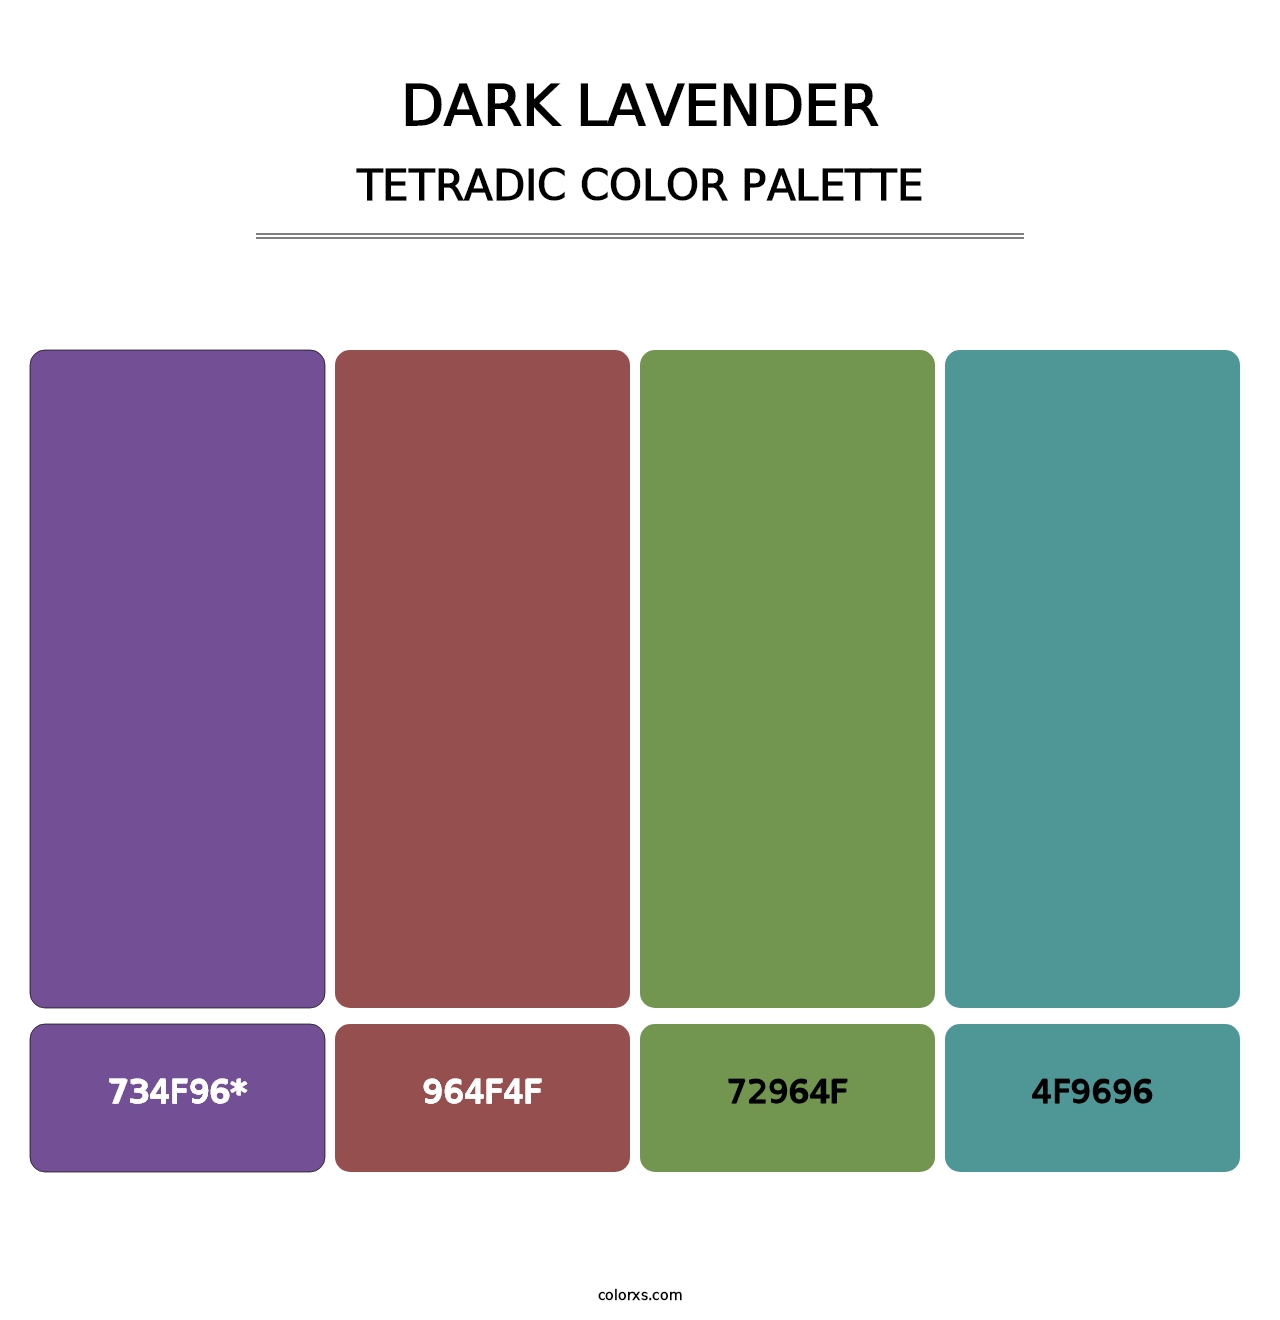 Dark Lavender - Tetradic Color Palette